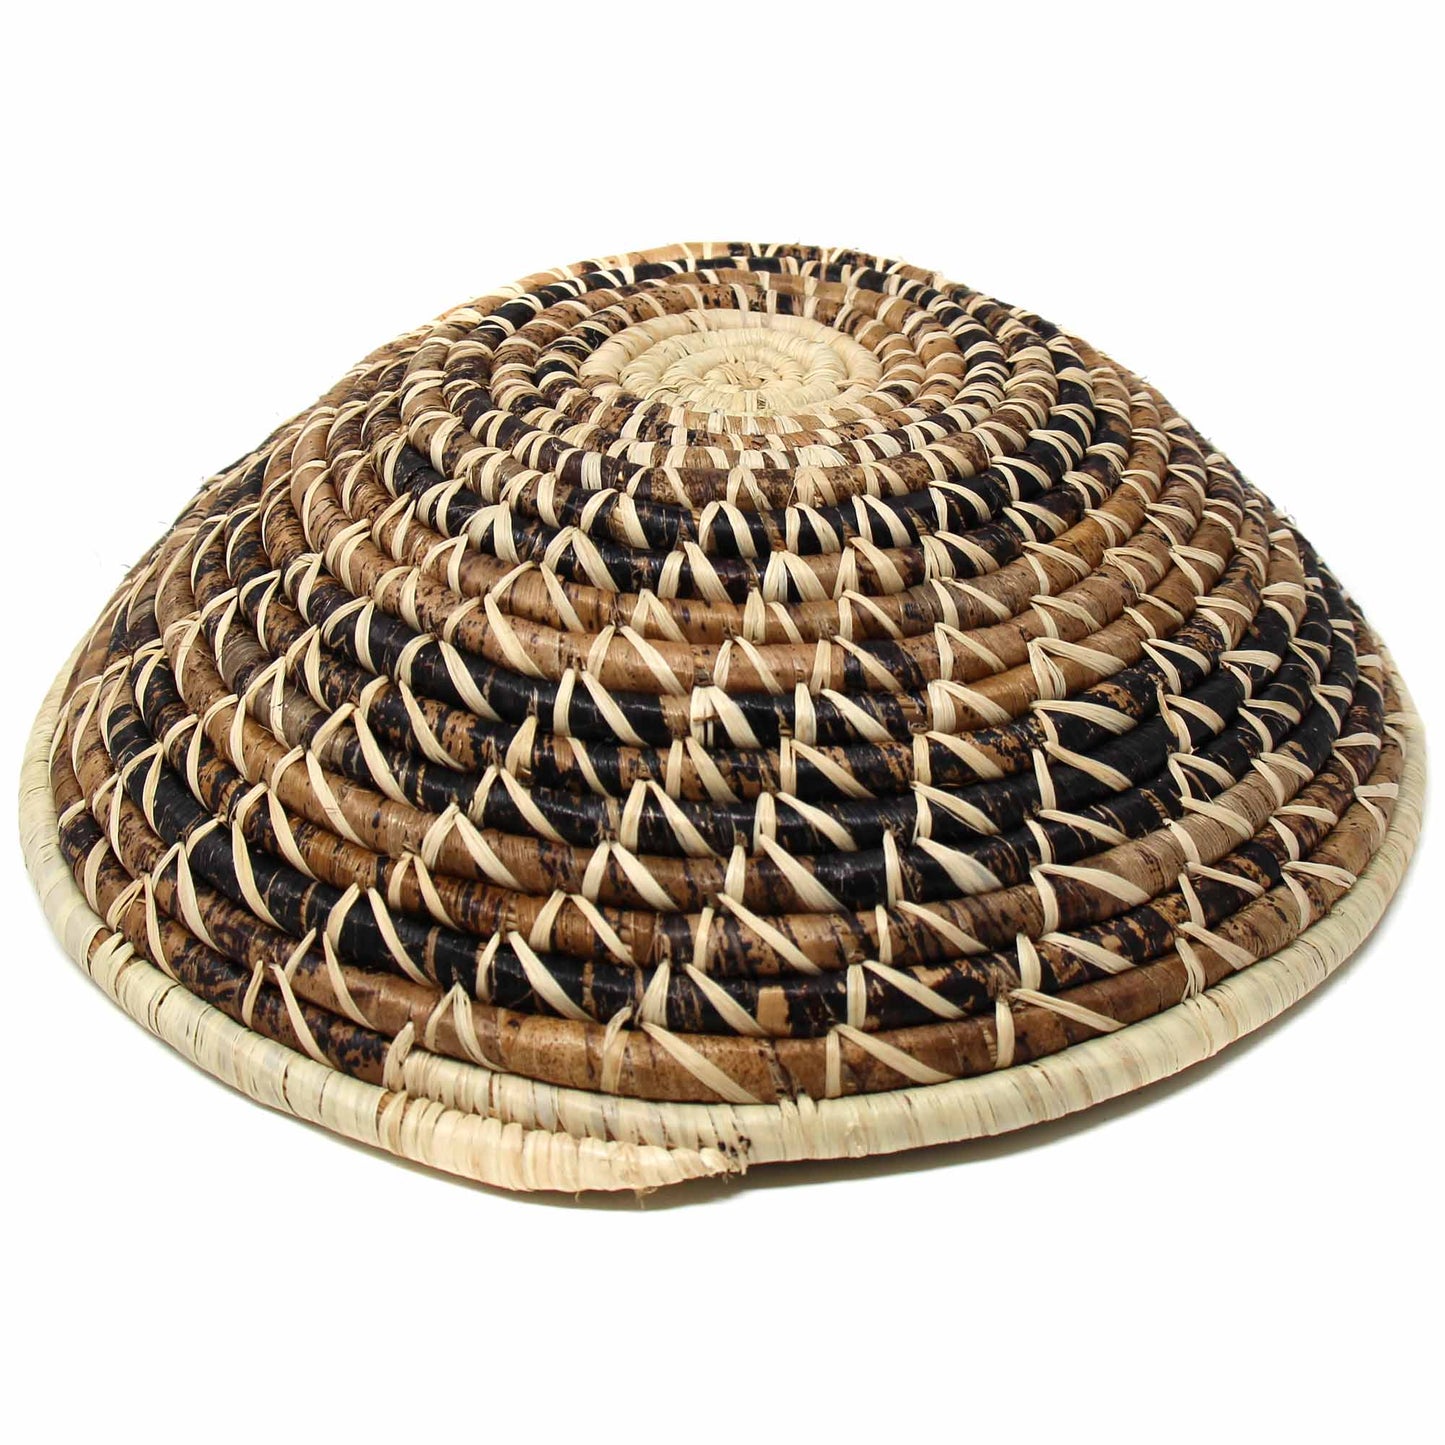 Cesta tejida de sisal, espirales de tallos de trigo en color natural